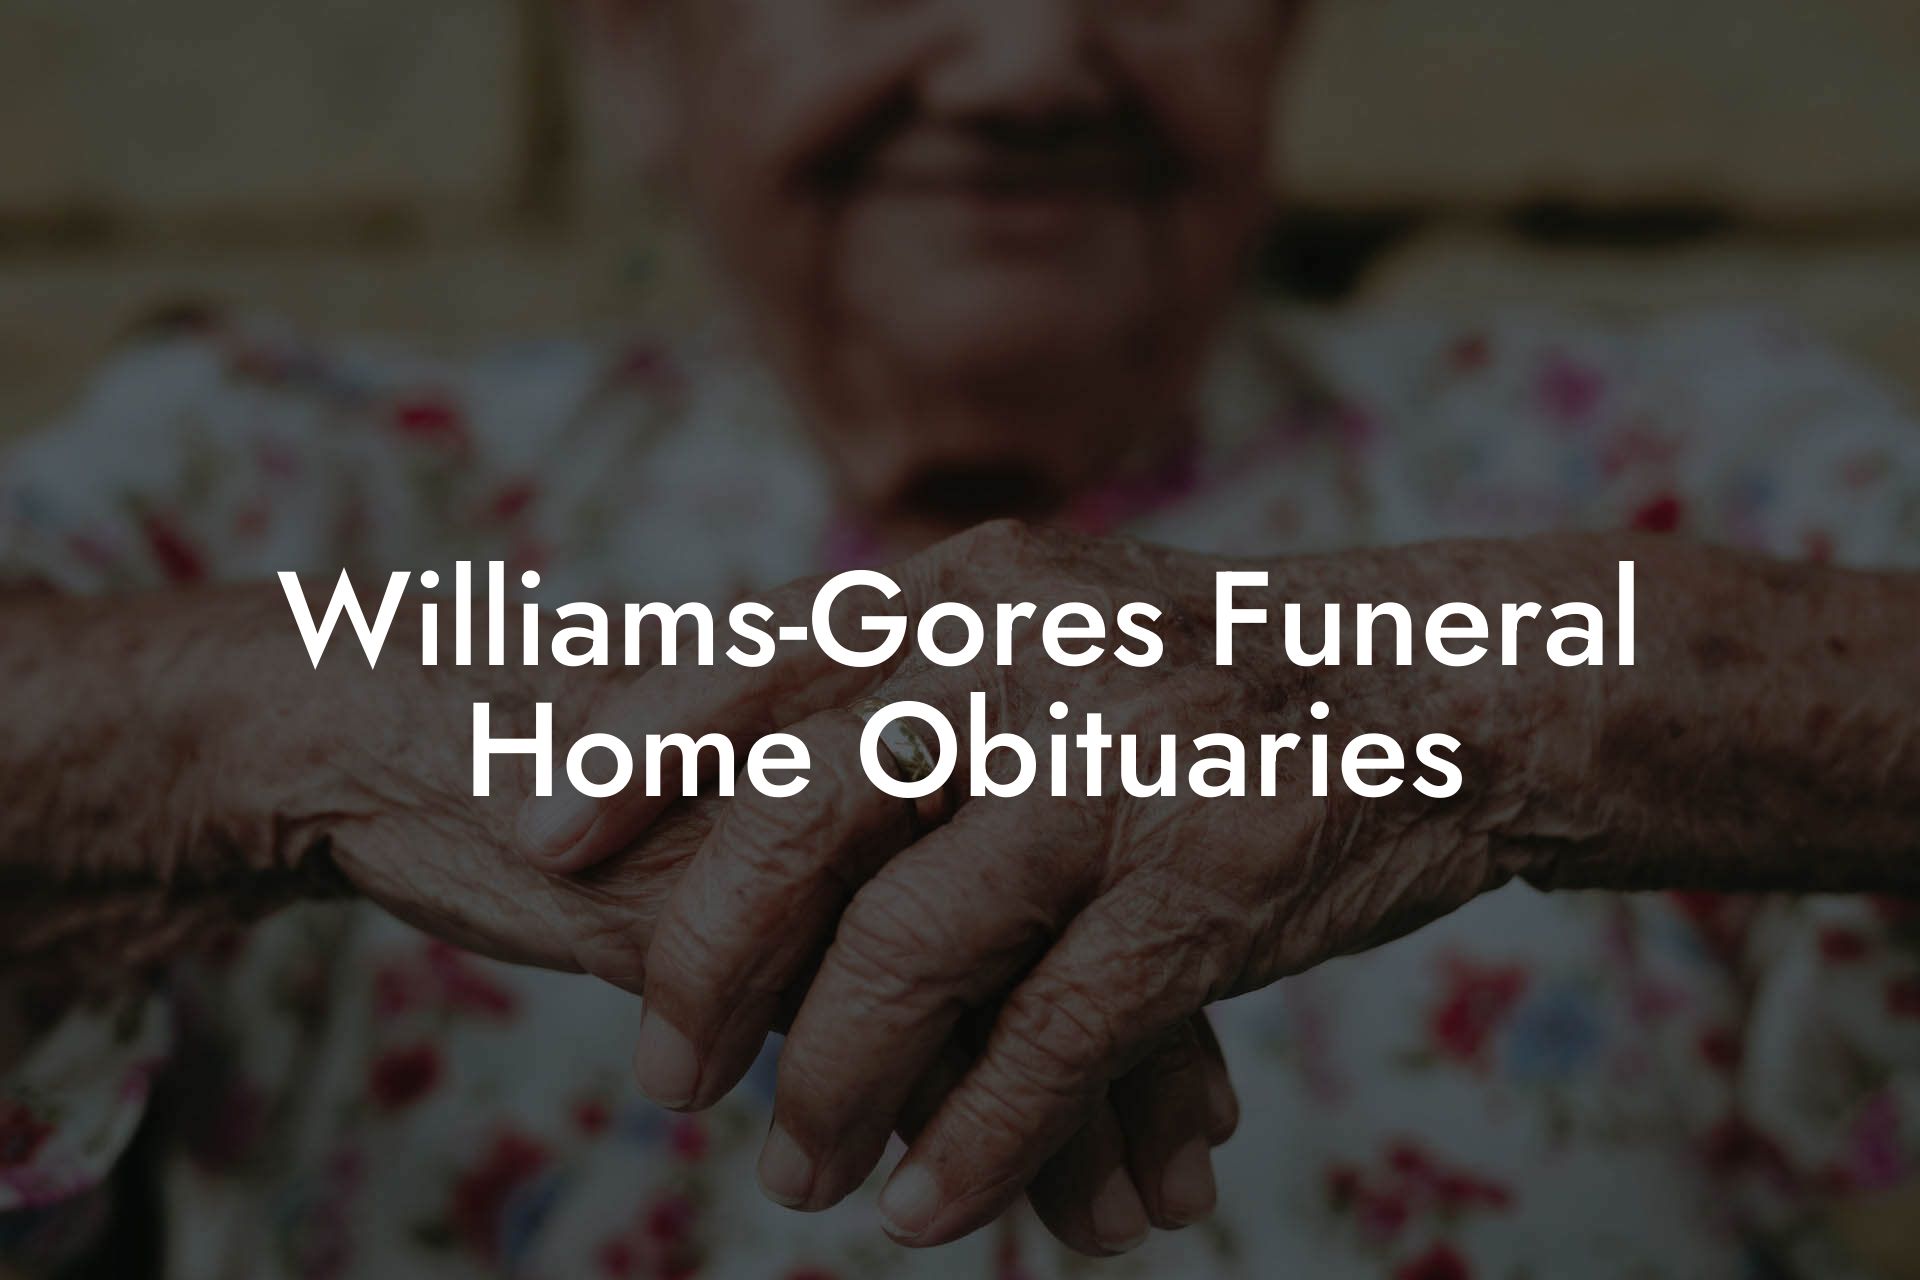 Williams-Gores Funeral Home Obituaries